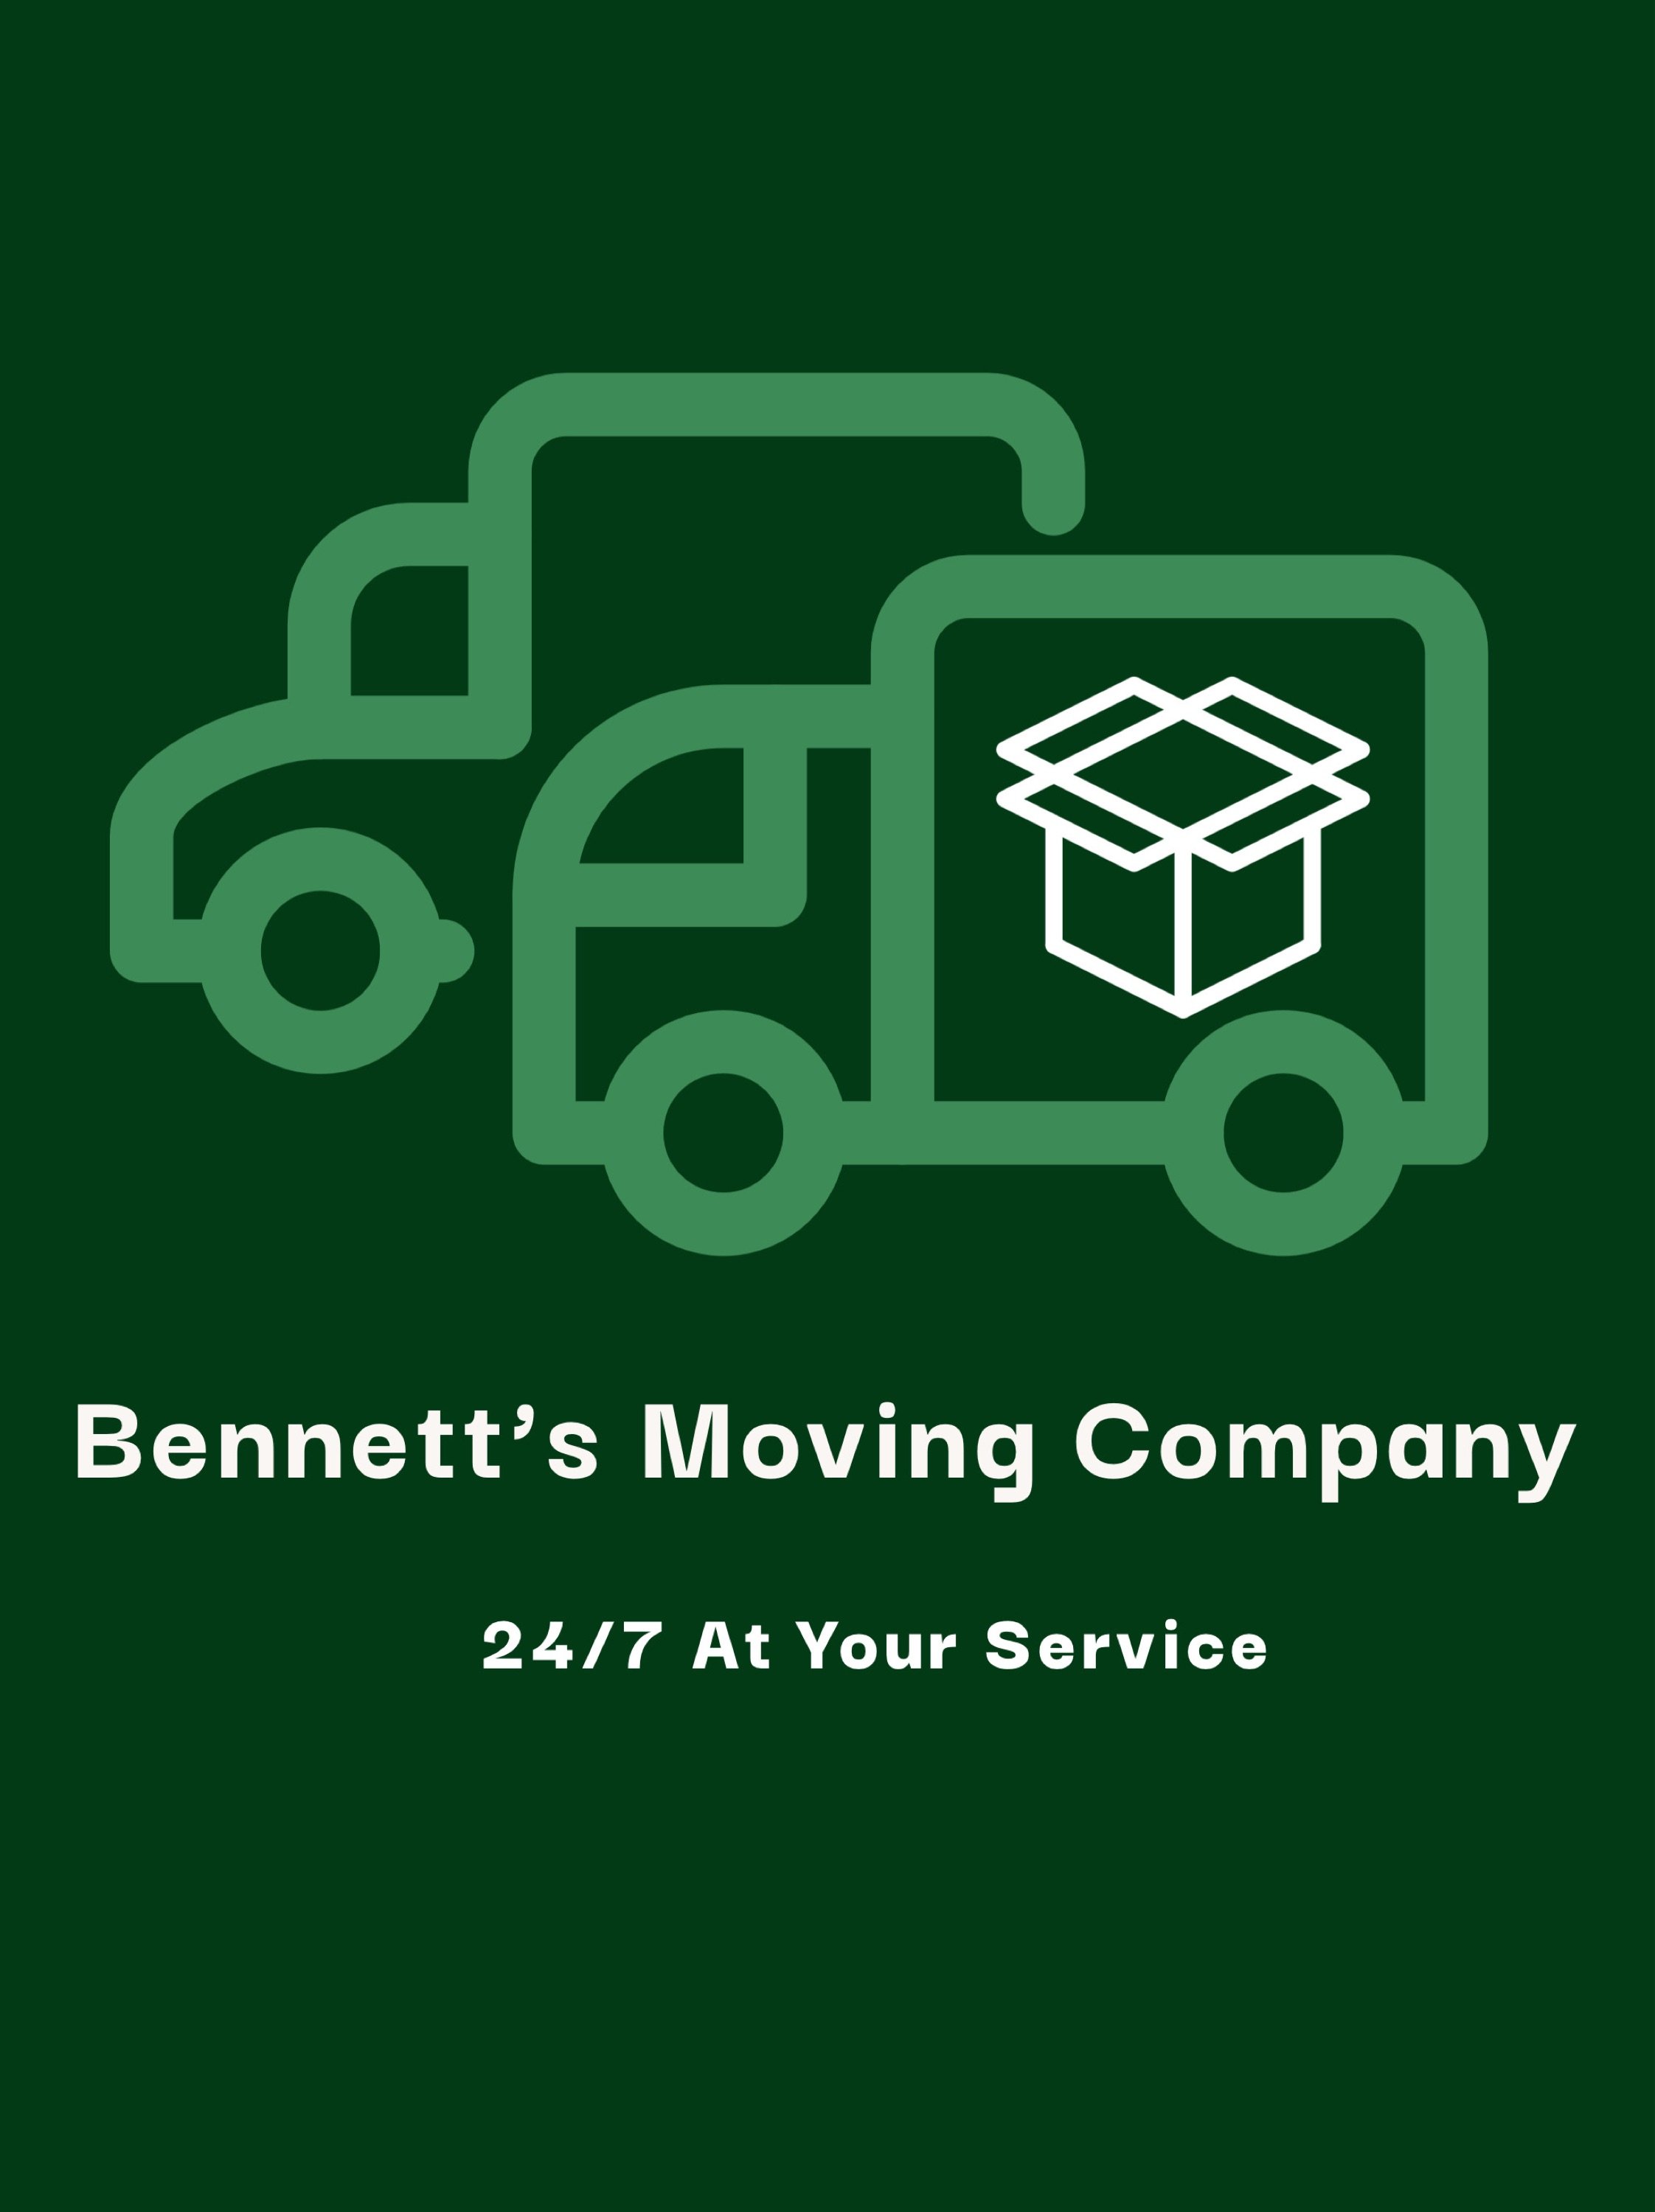 Bennett's Moving Company Logo